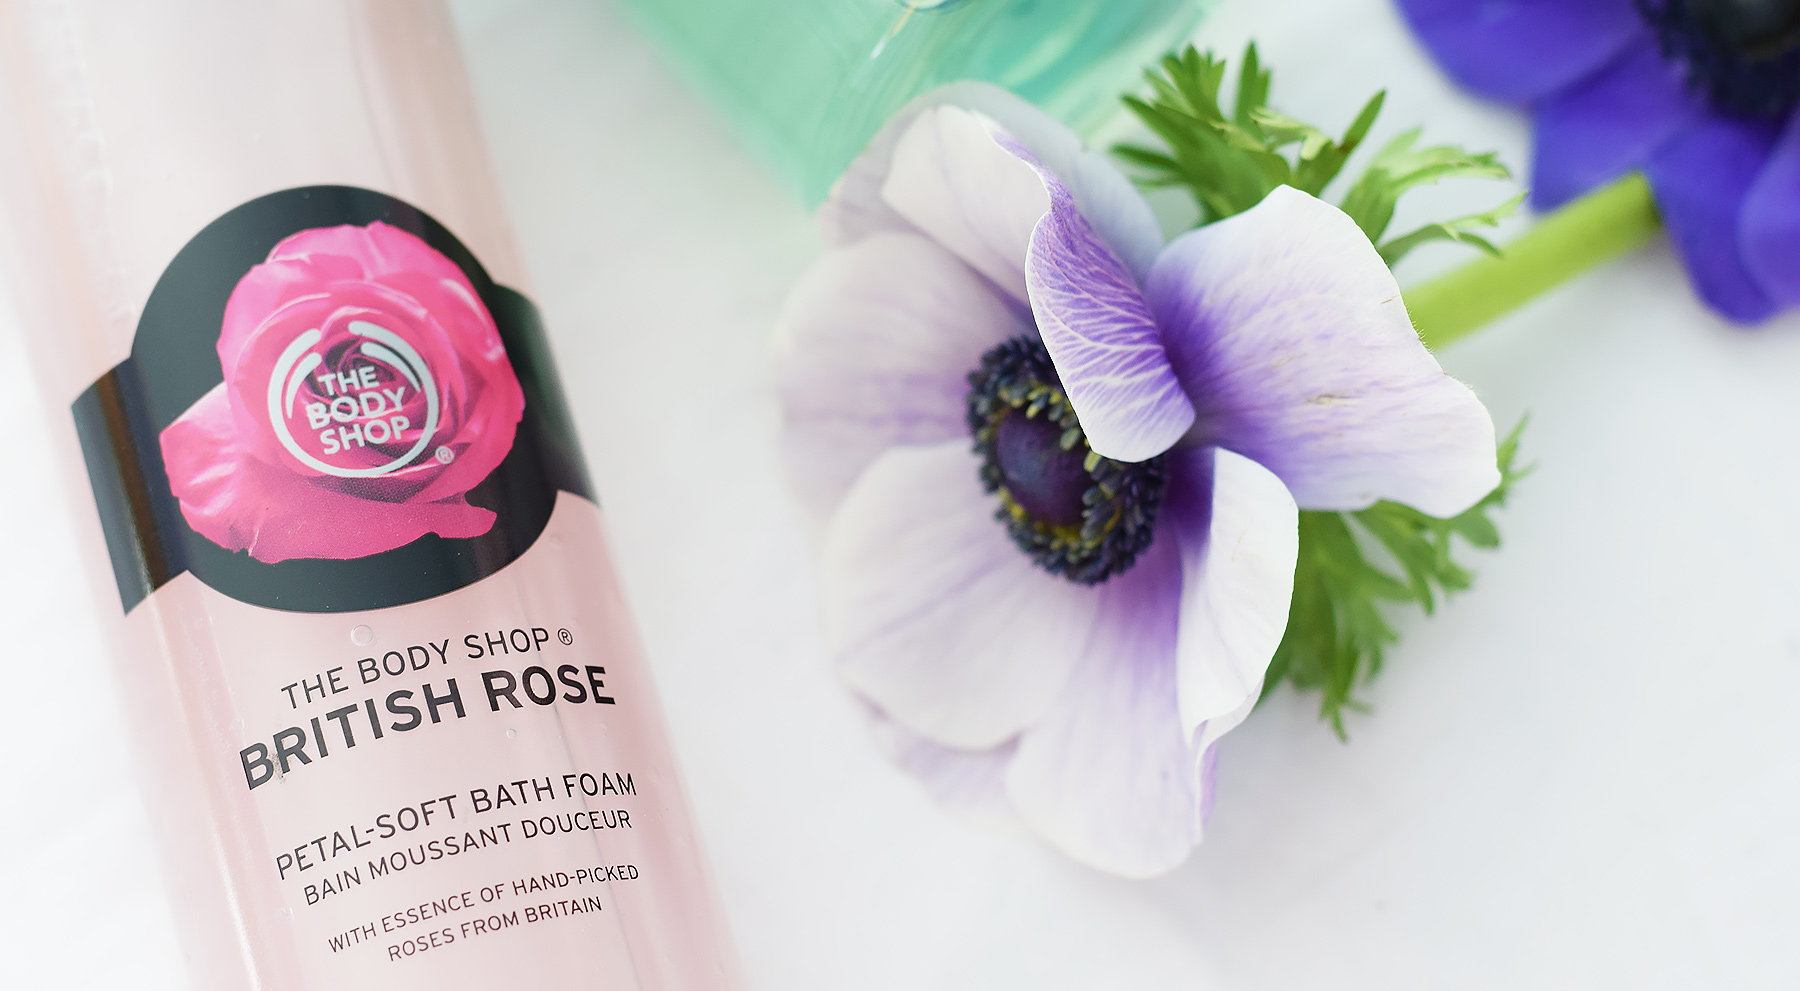 The Body Shop British Rose Bubble Bath review